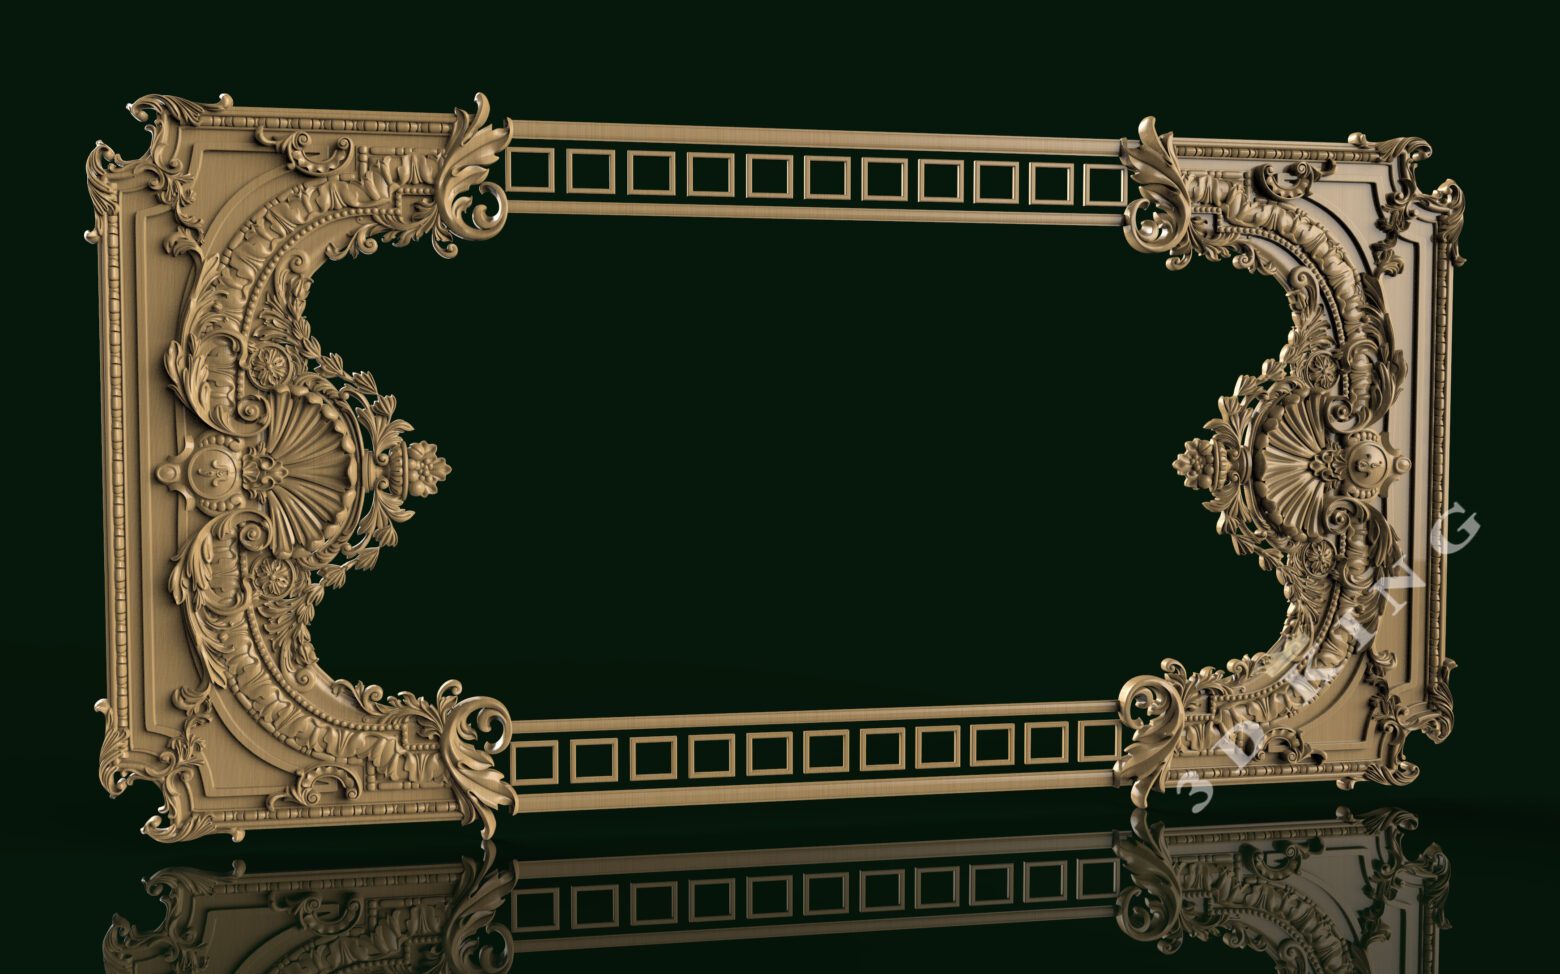 stl 3d models 120+ pieces original mirror frames set for cnc router aspire artcam engraver carving download